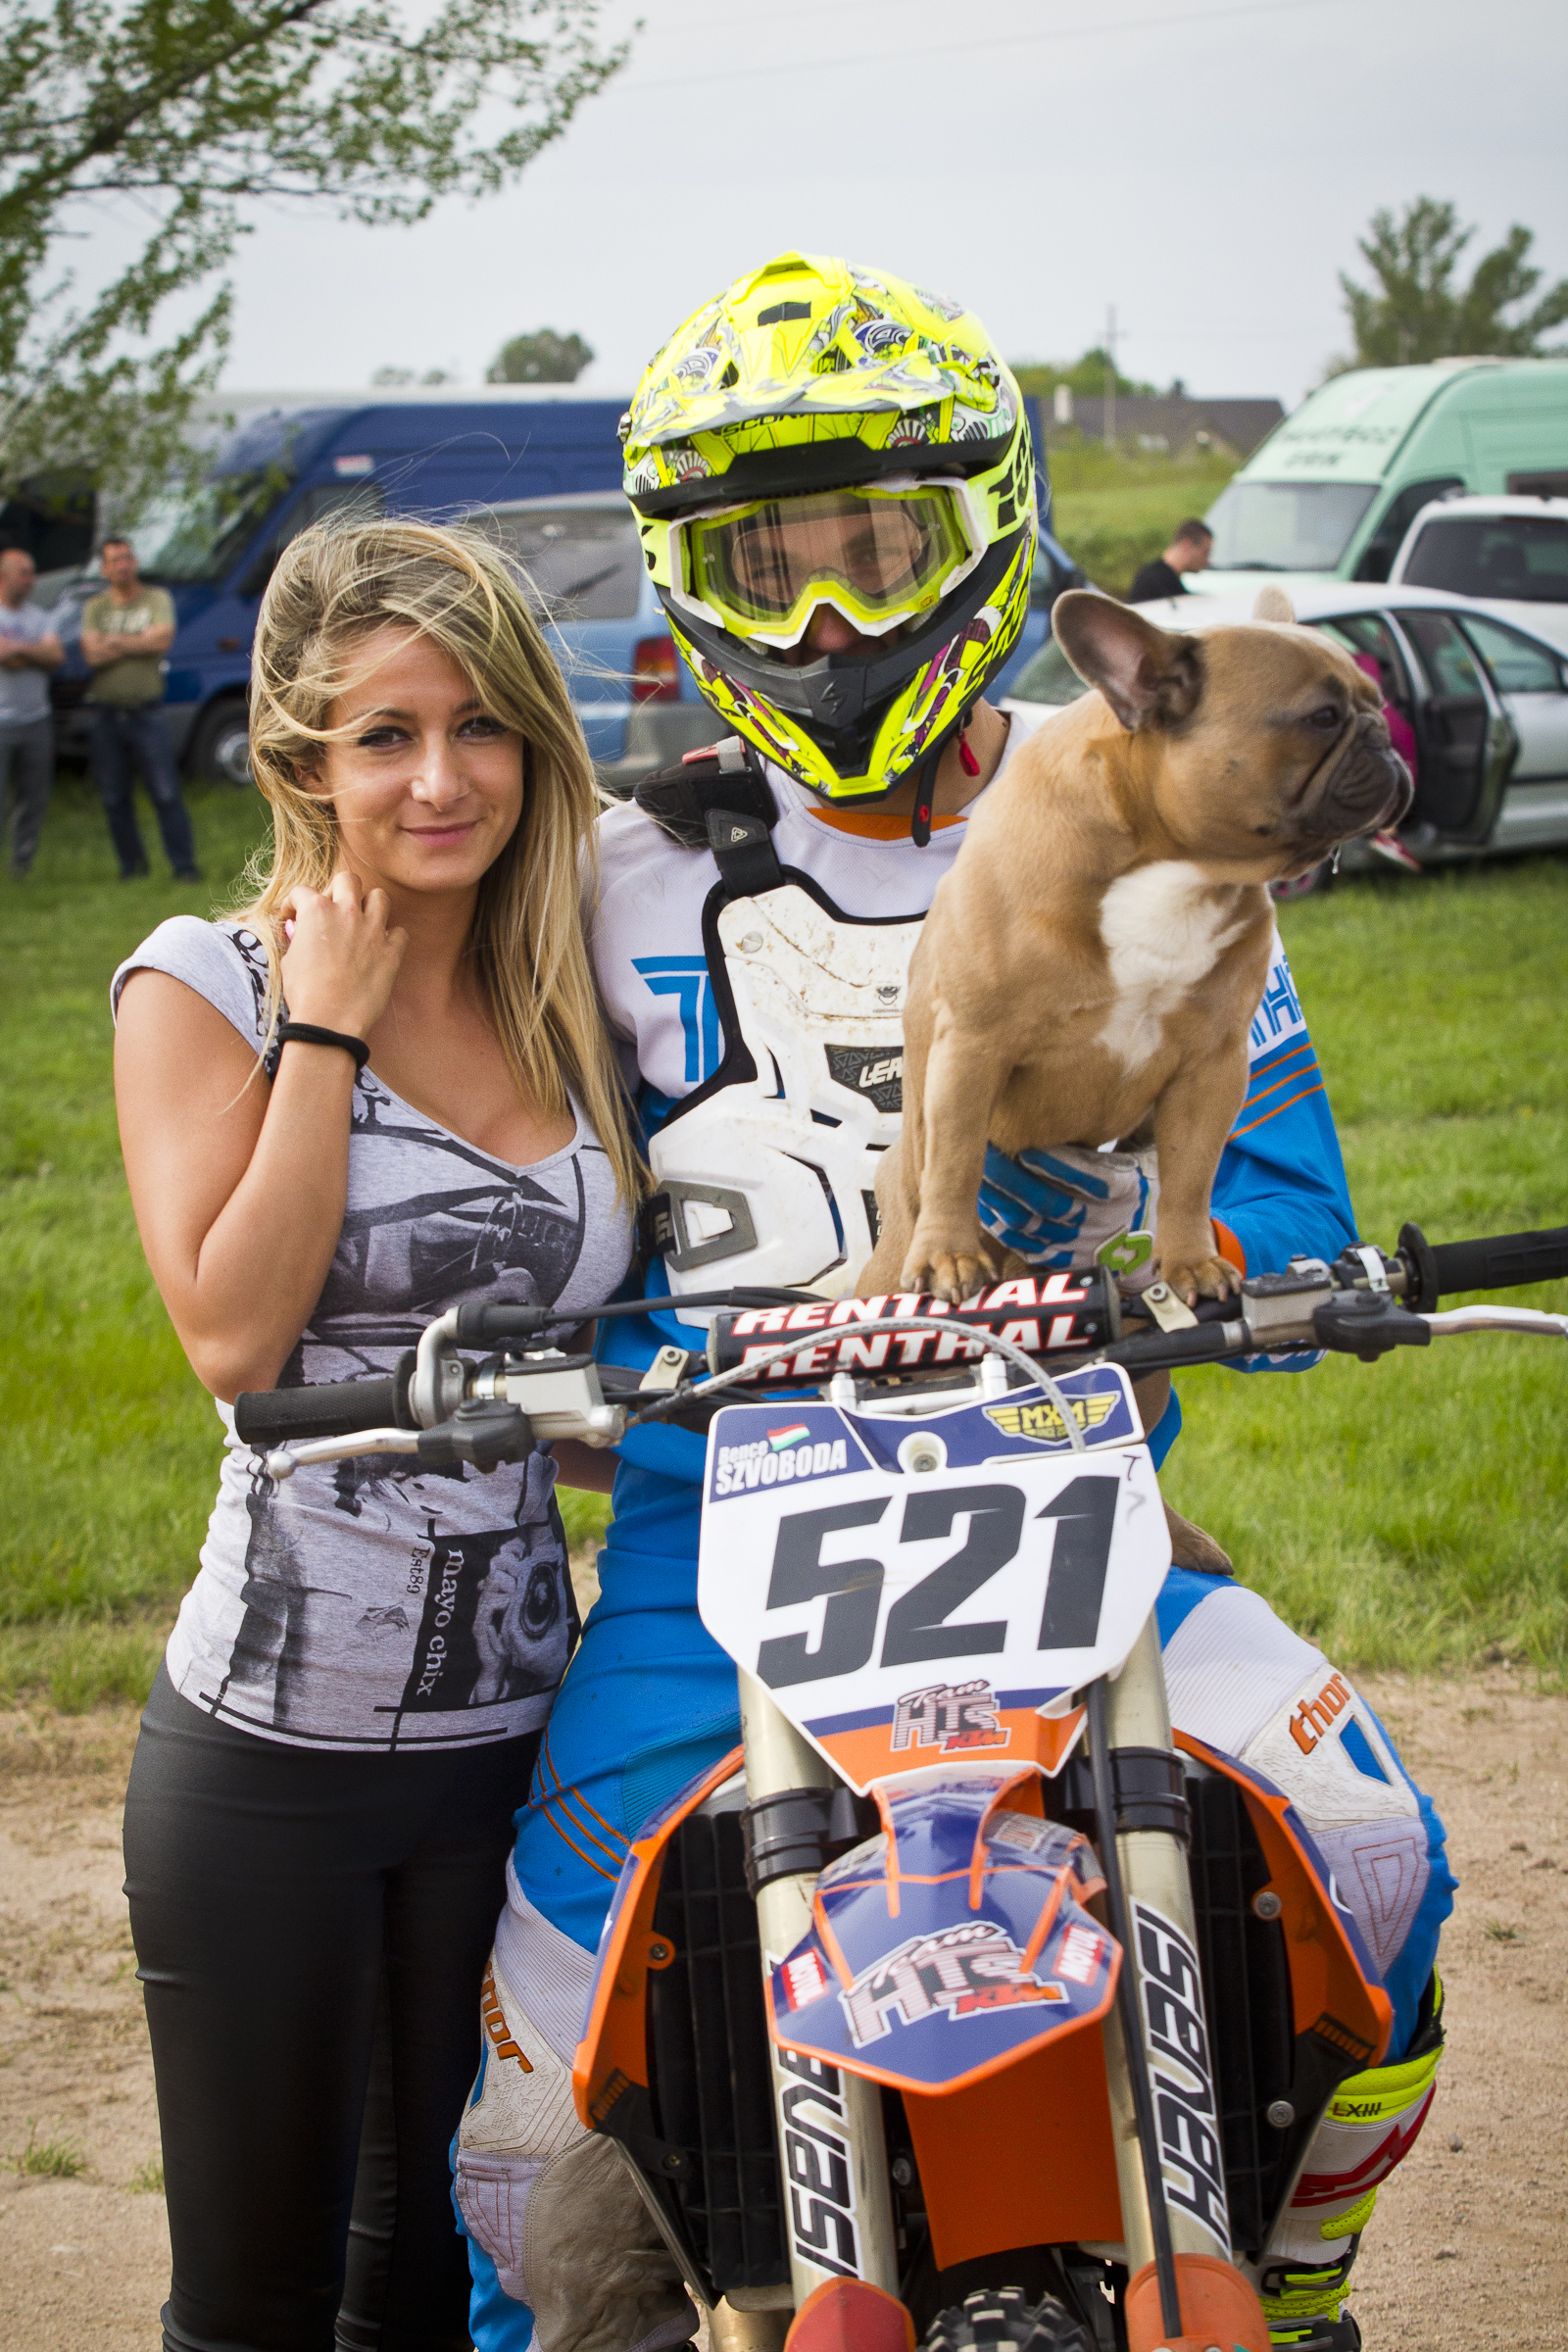 Interview with The Hungarian Bulldog; aka Bence Szvoboda multiple Motocross Champion